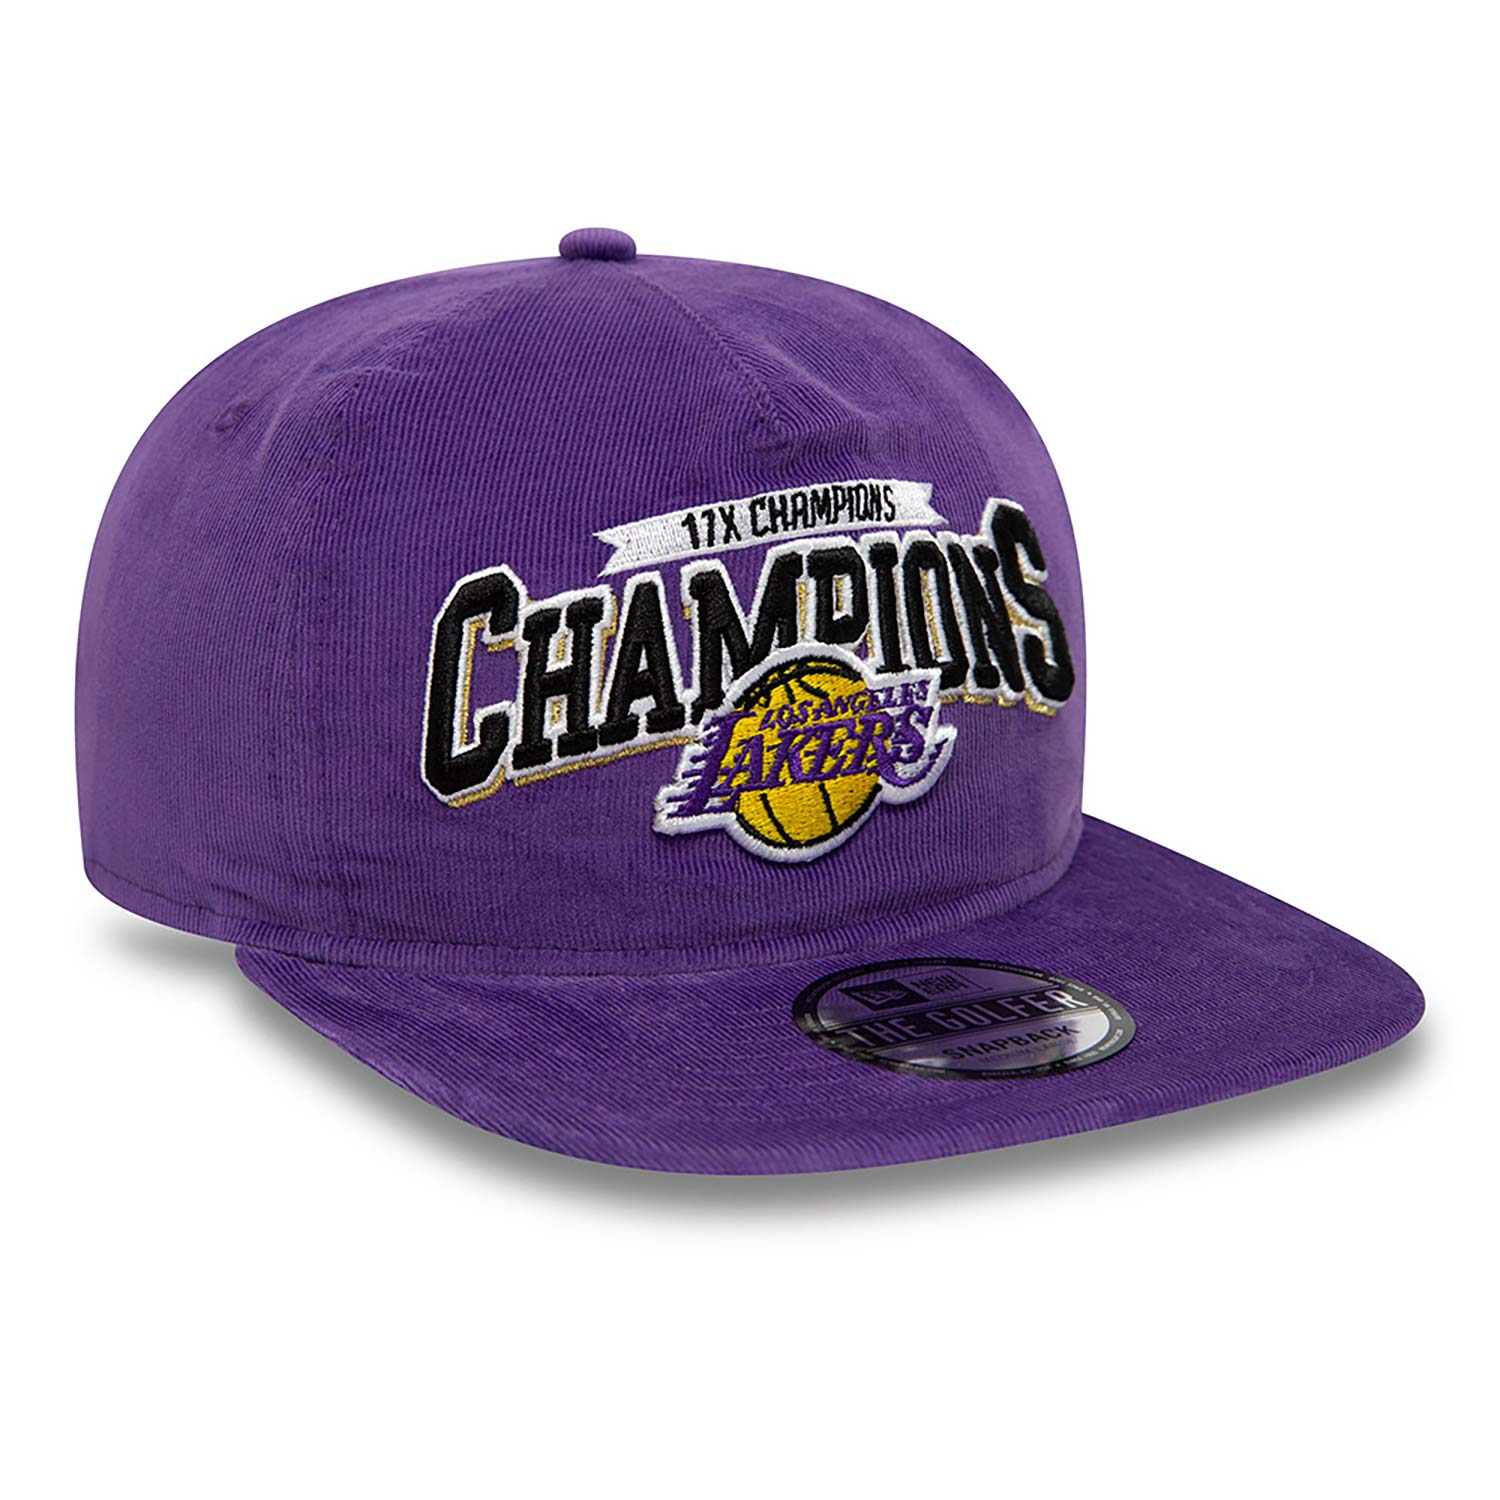 LA Lakers League 17X Champions Purple Golfer Snapback Cap